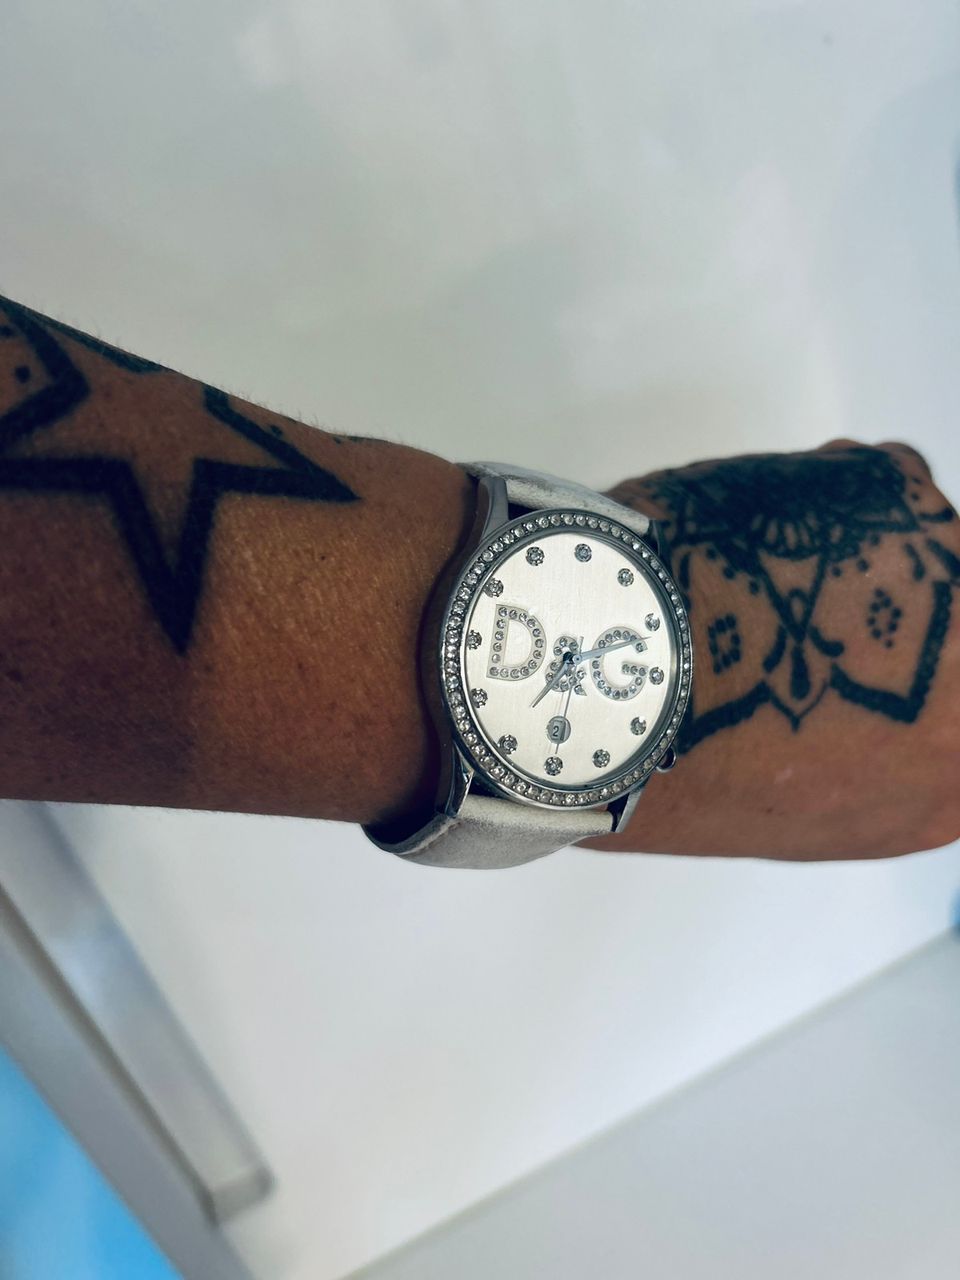 D&G Dolce and Gabbana kristallein koristeltu kello ovh 300€